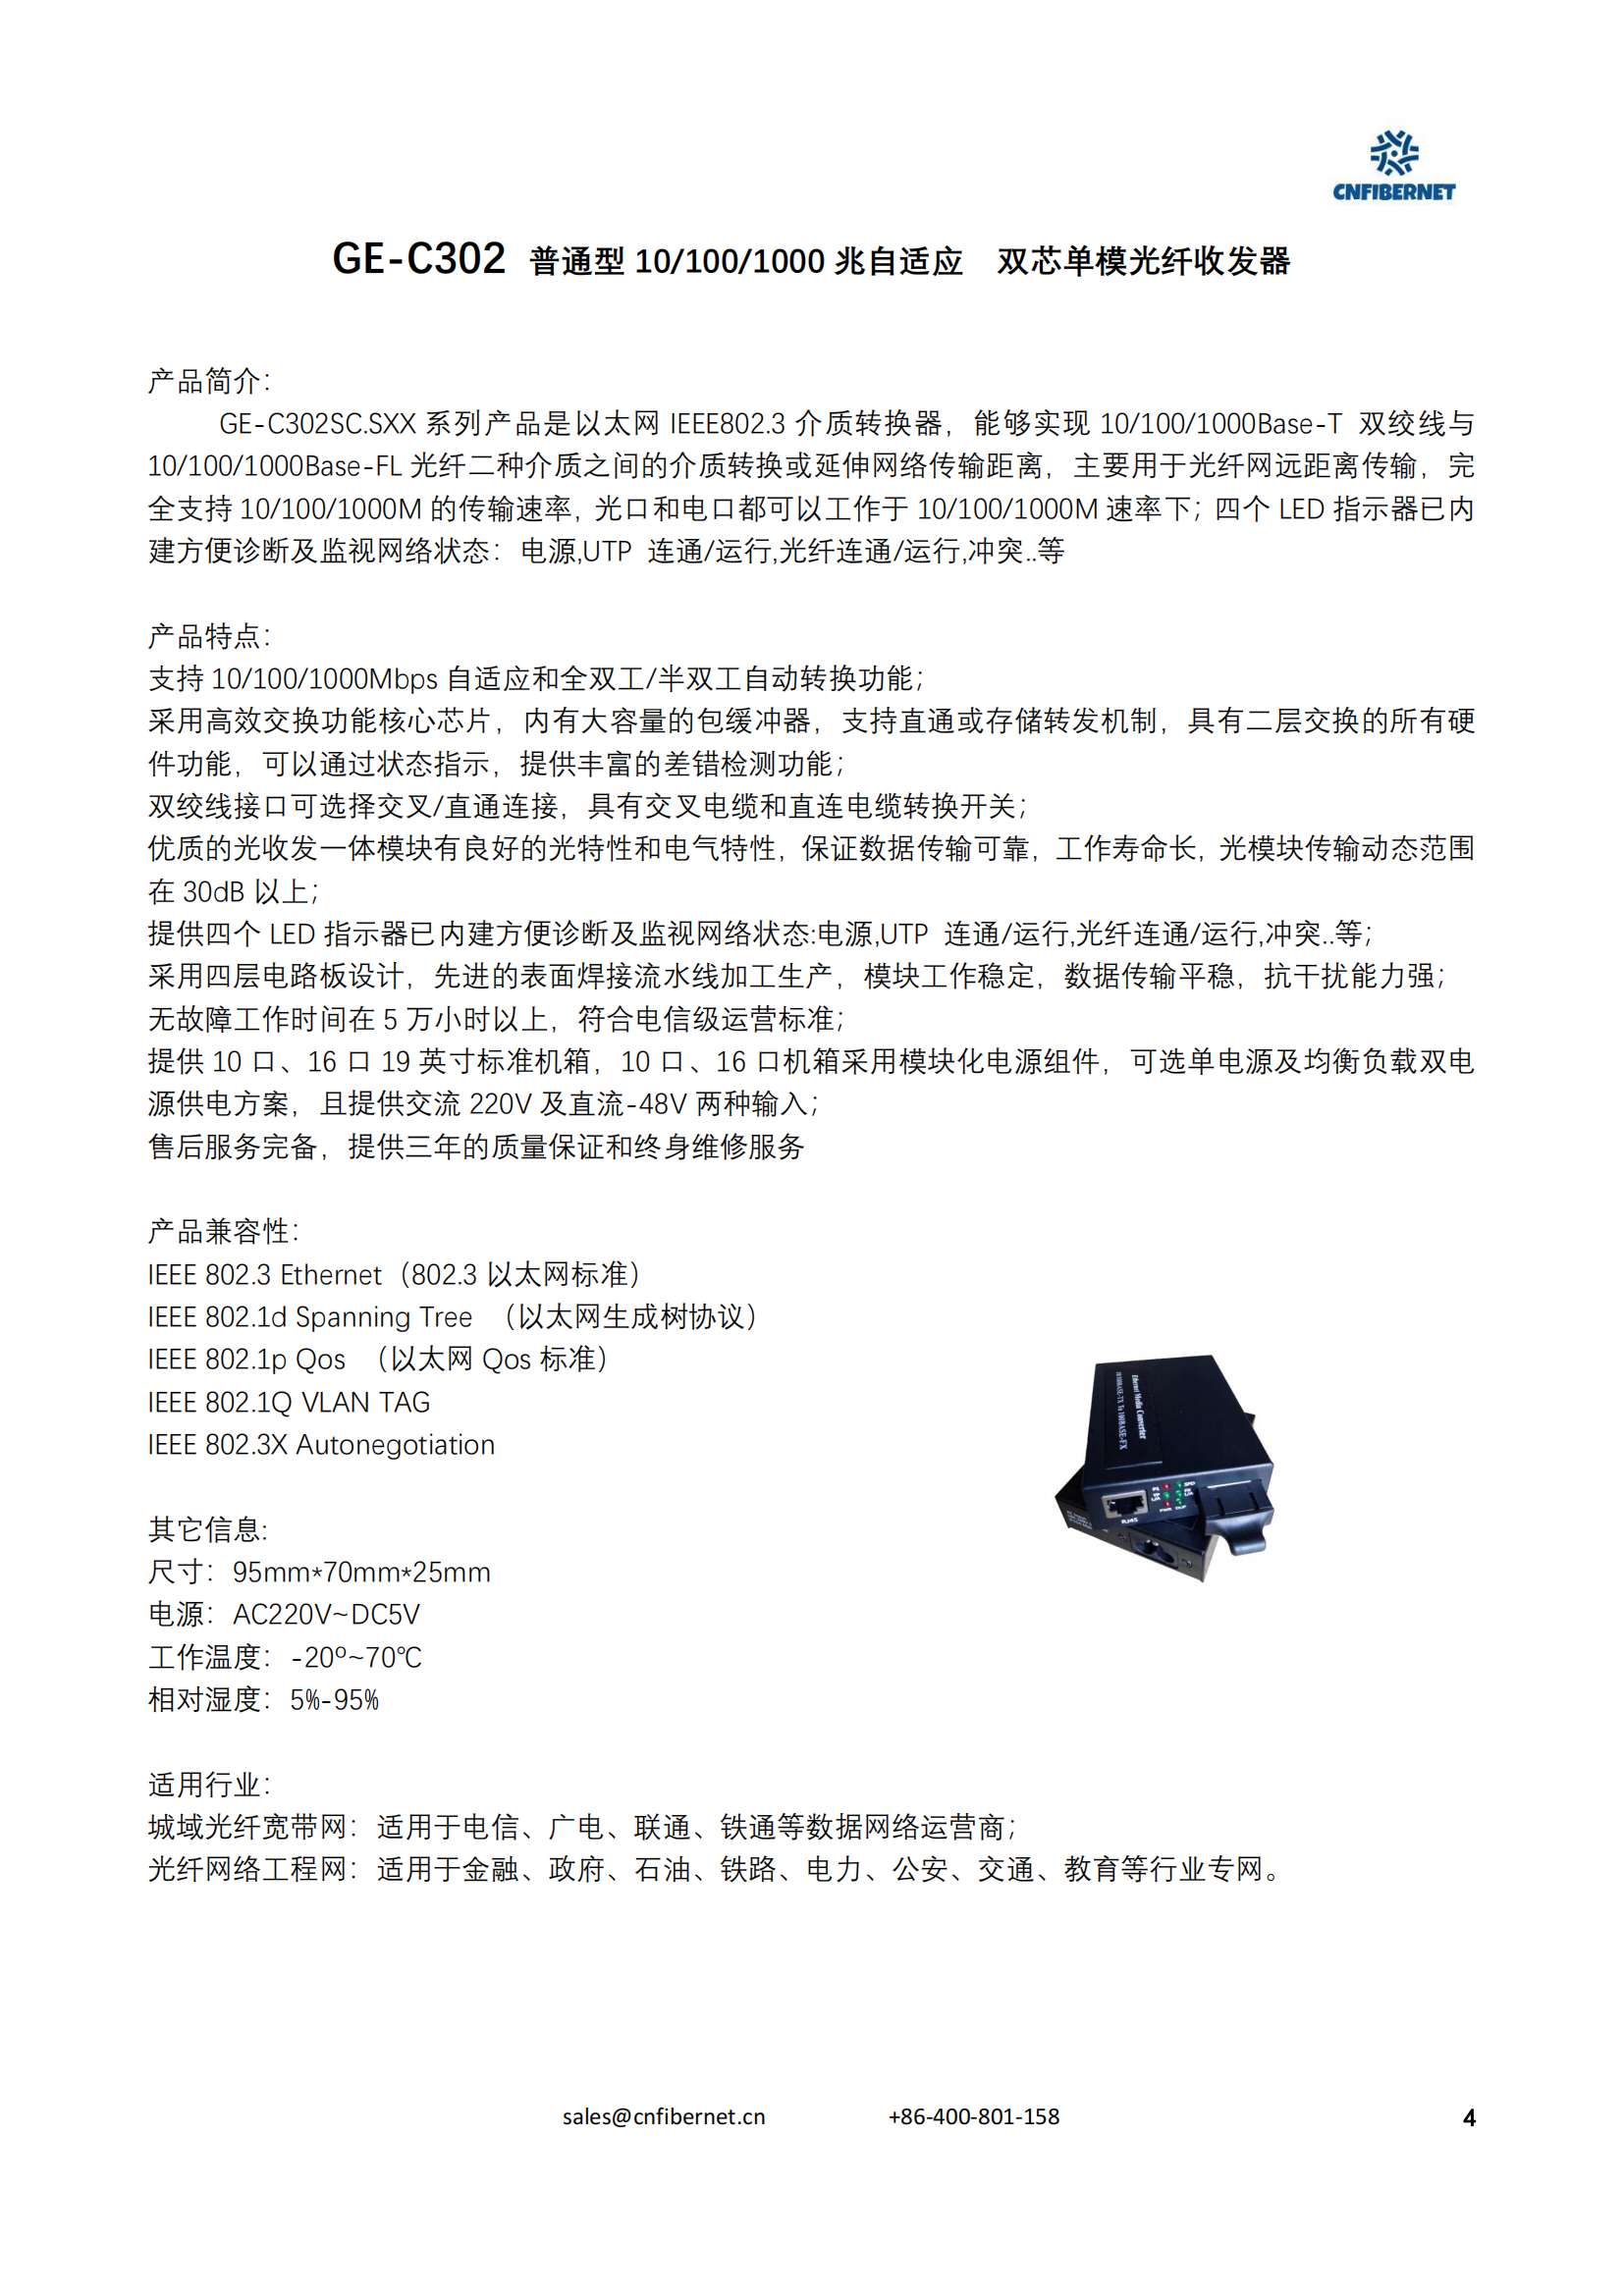 GE-C302SC.S100 dual-fiber 1000M single-mode fiber optic transceiver (100KM)